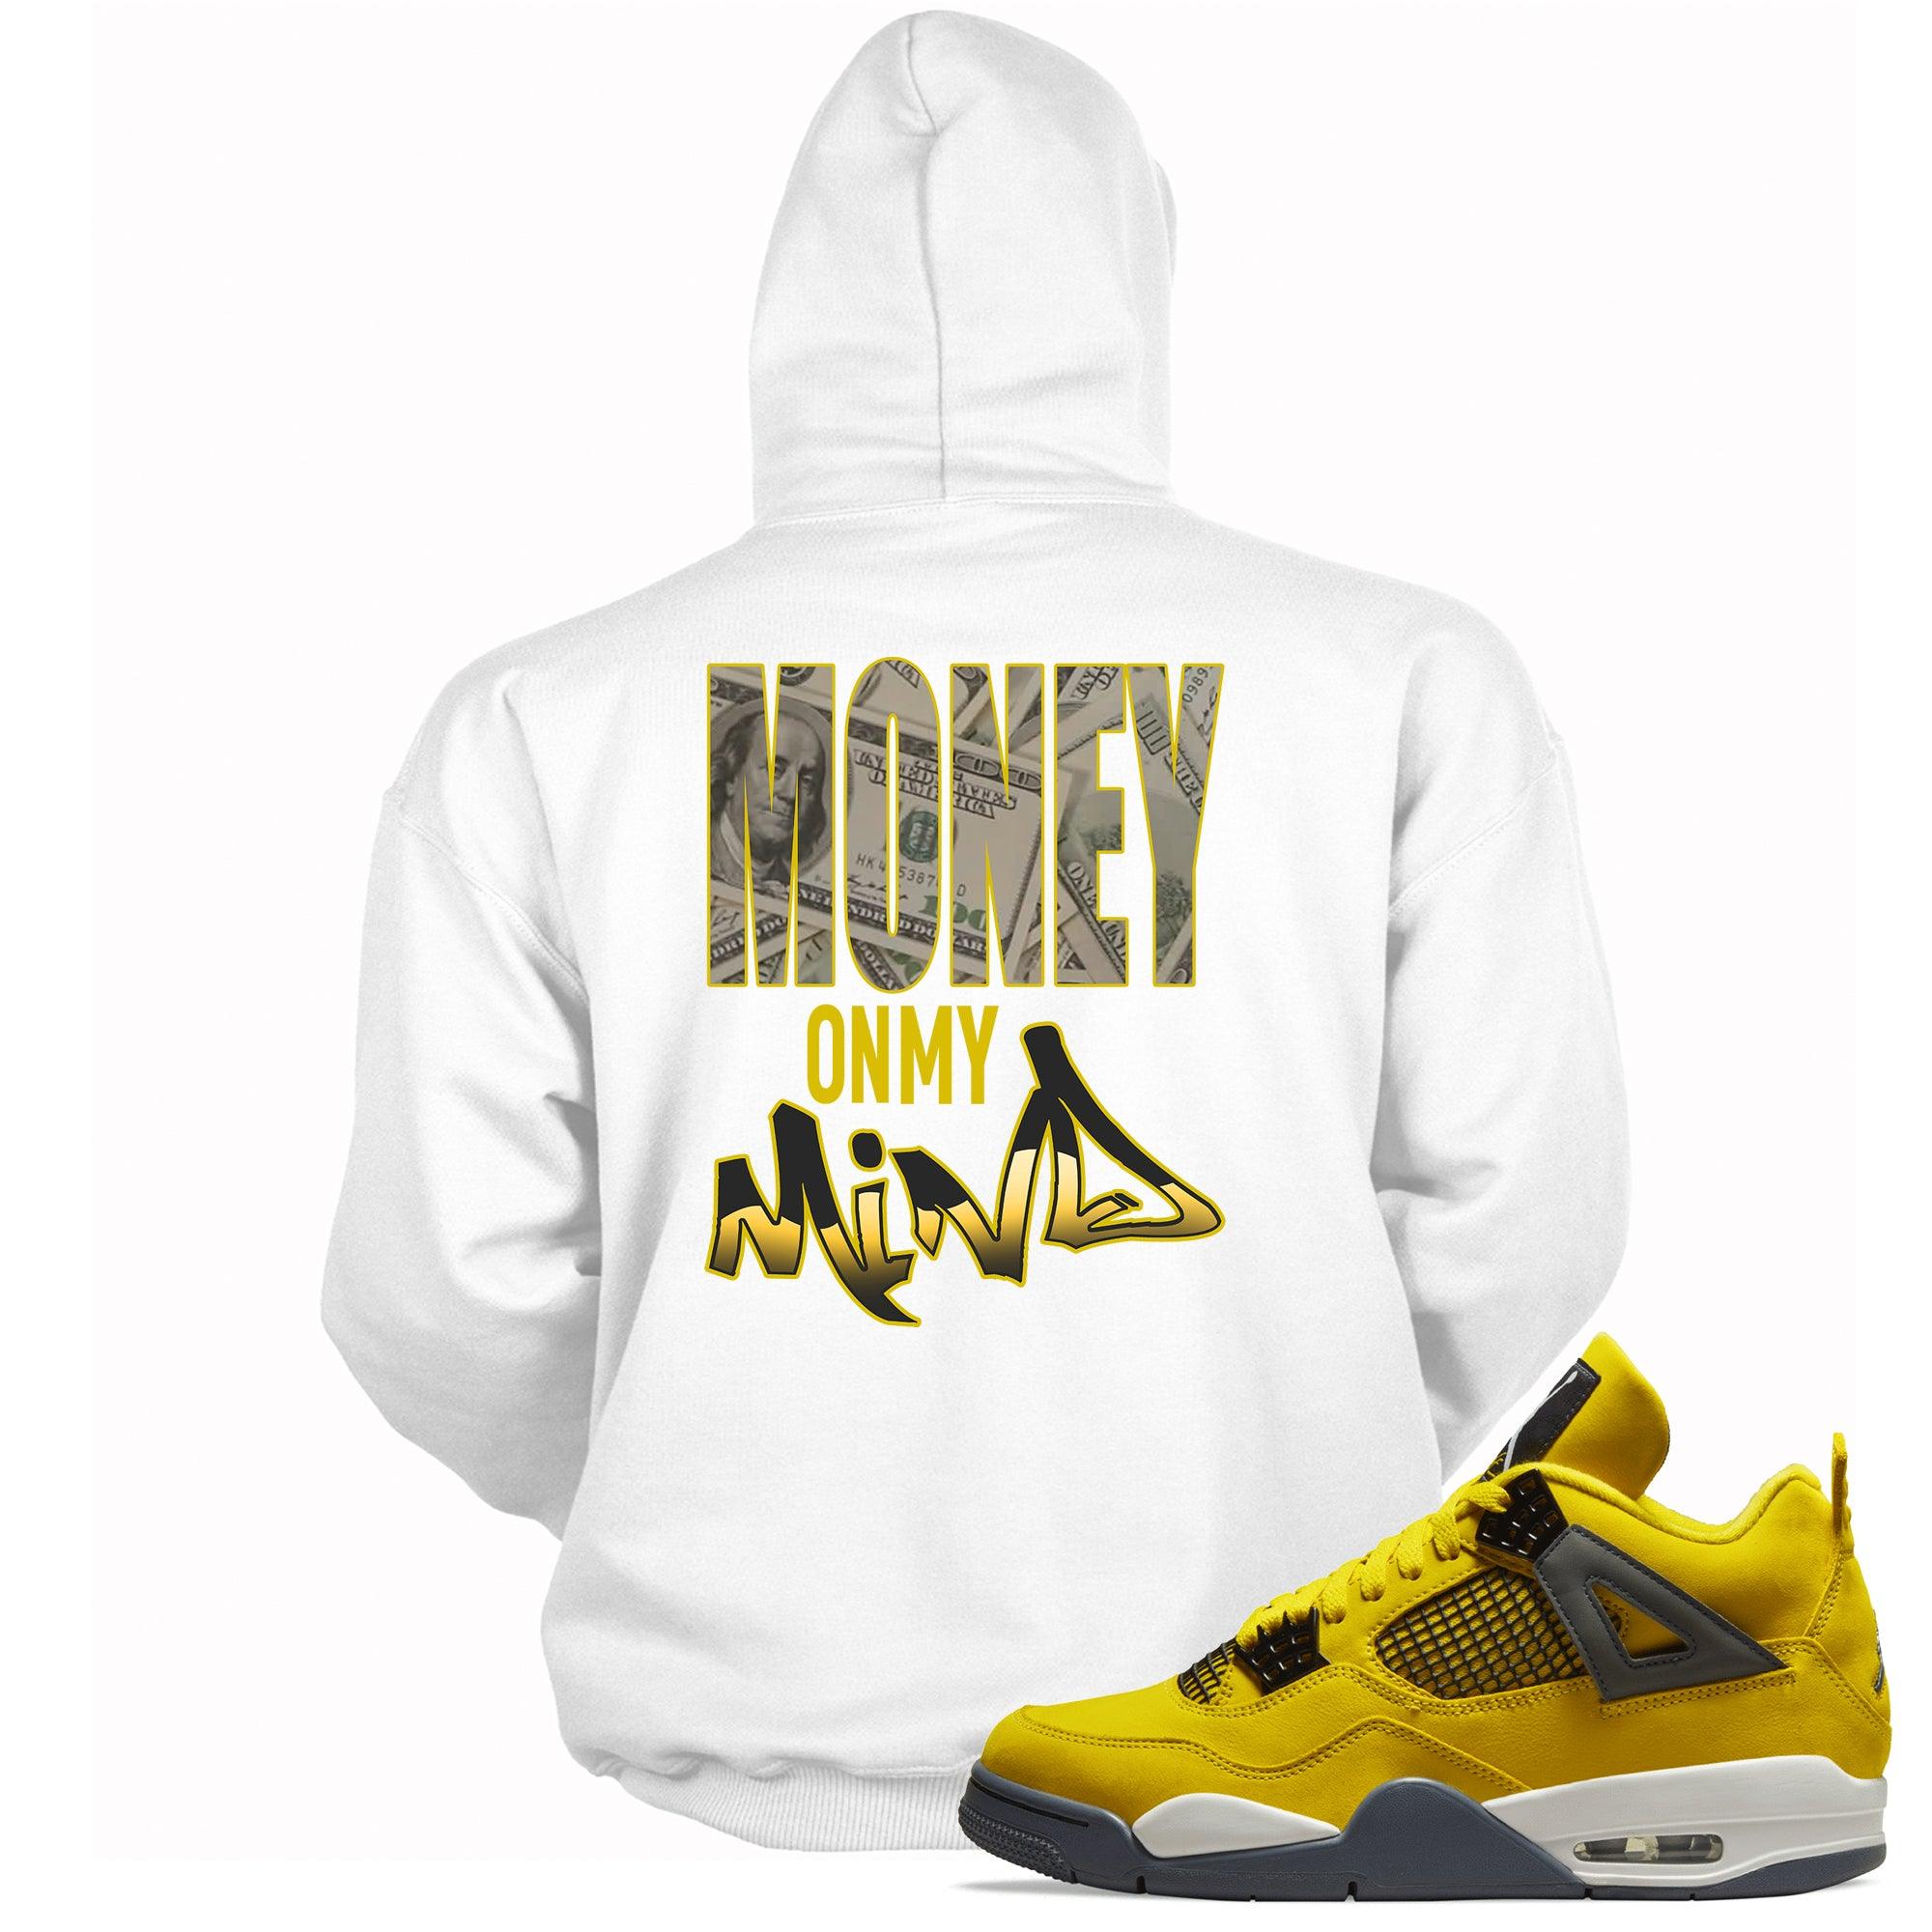 Money On My Mind Sneaker Sweatshirt AJ 4 Retro Lightning photo